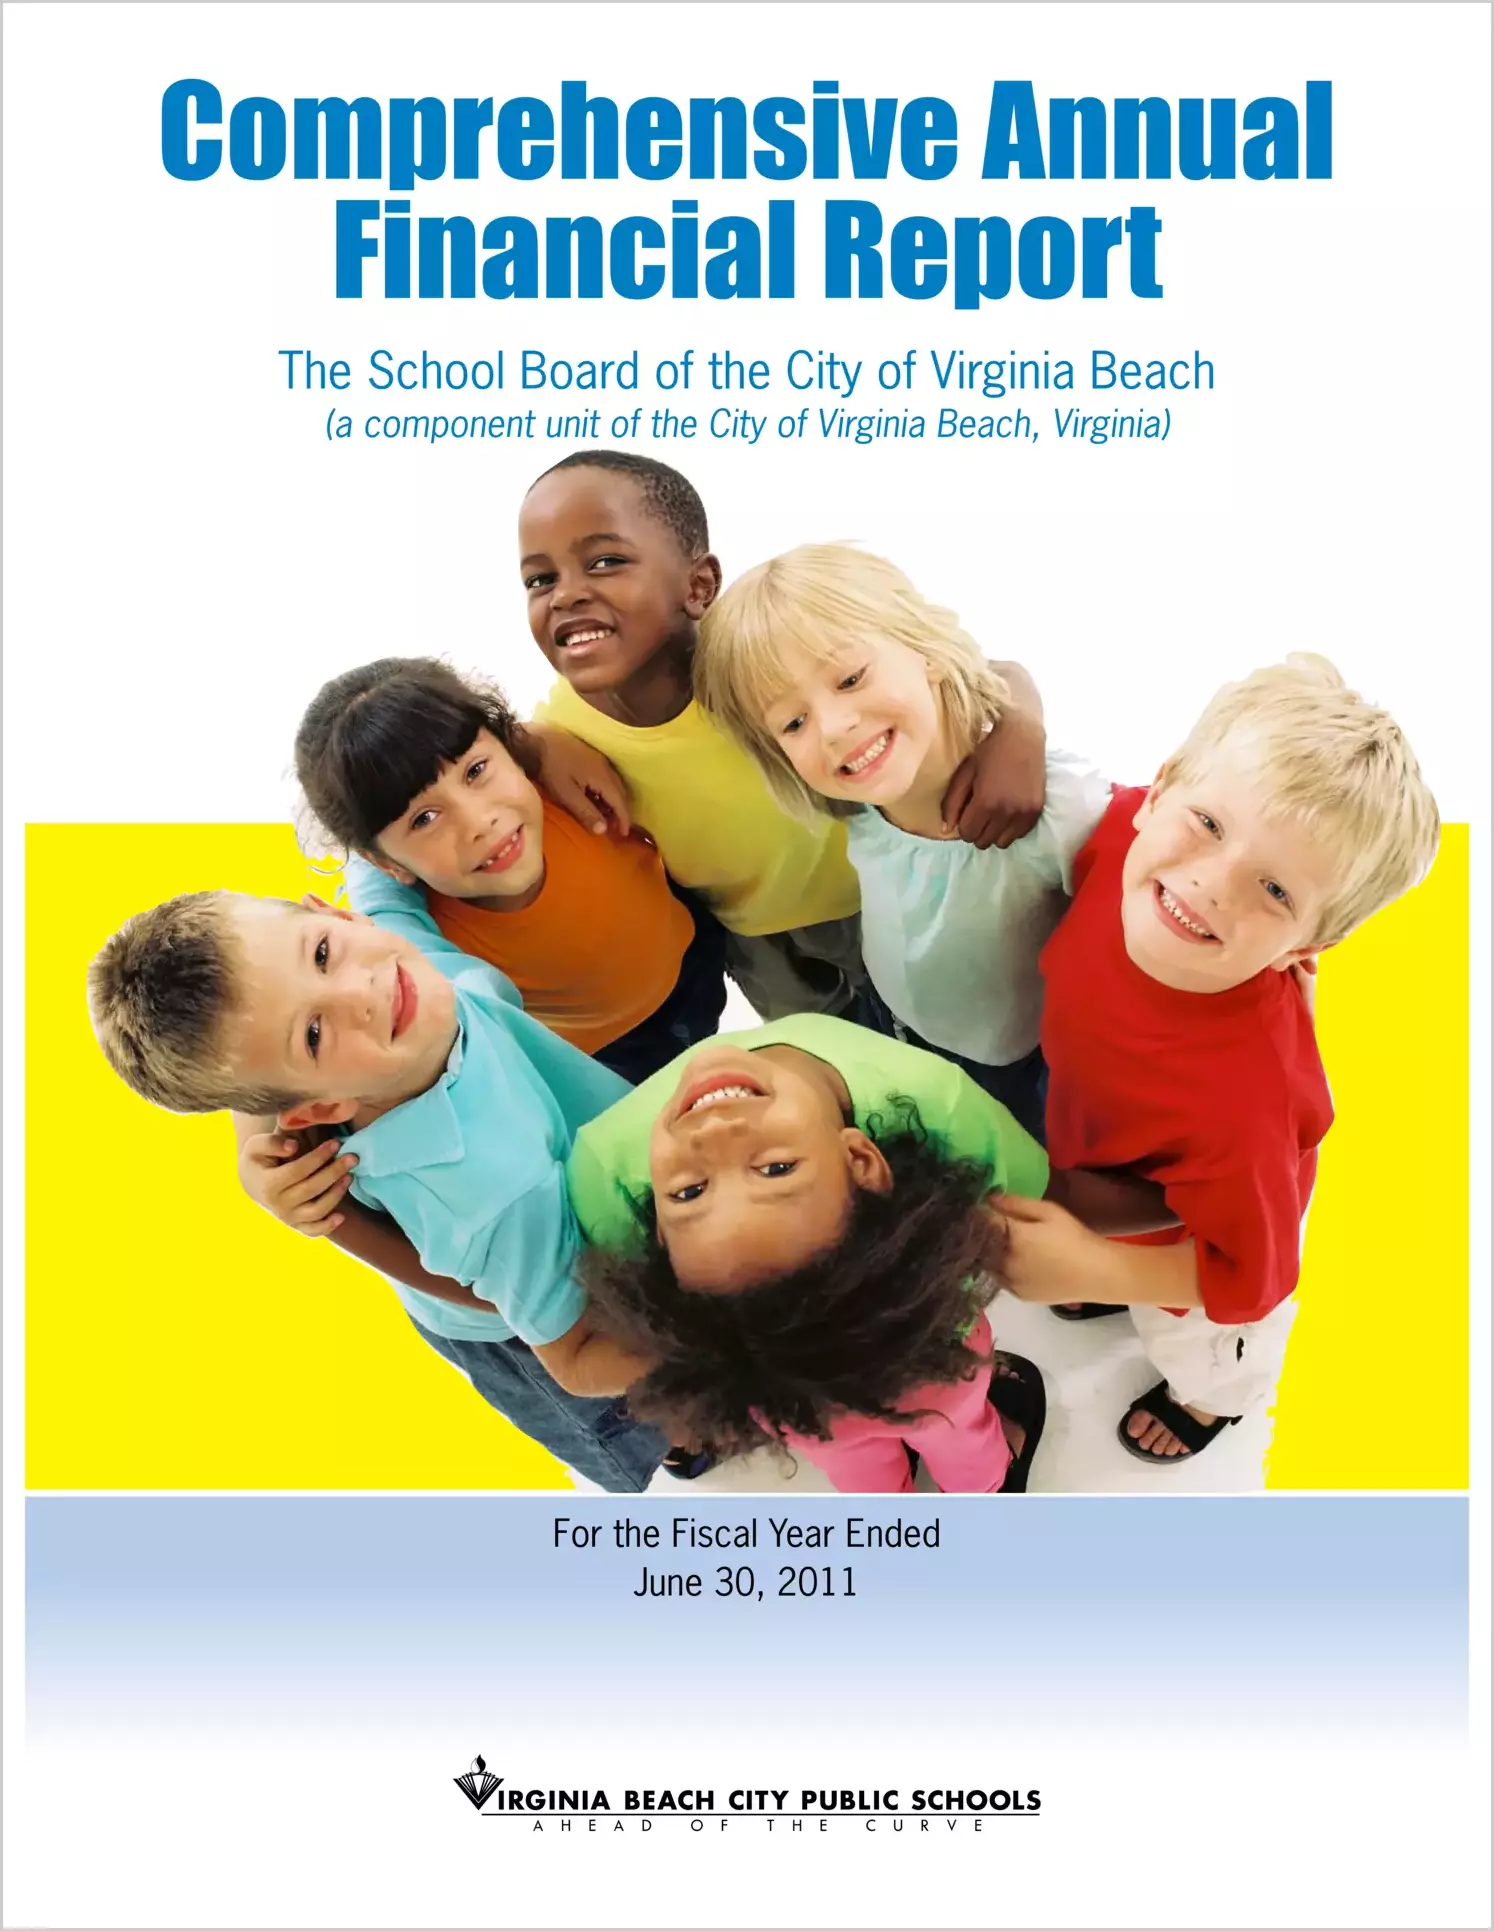 2011 Public Schools Annual Financial Report for City of Virginia Beach